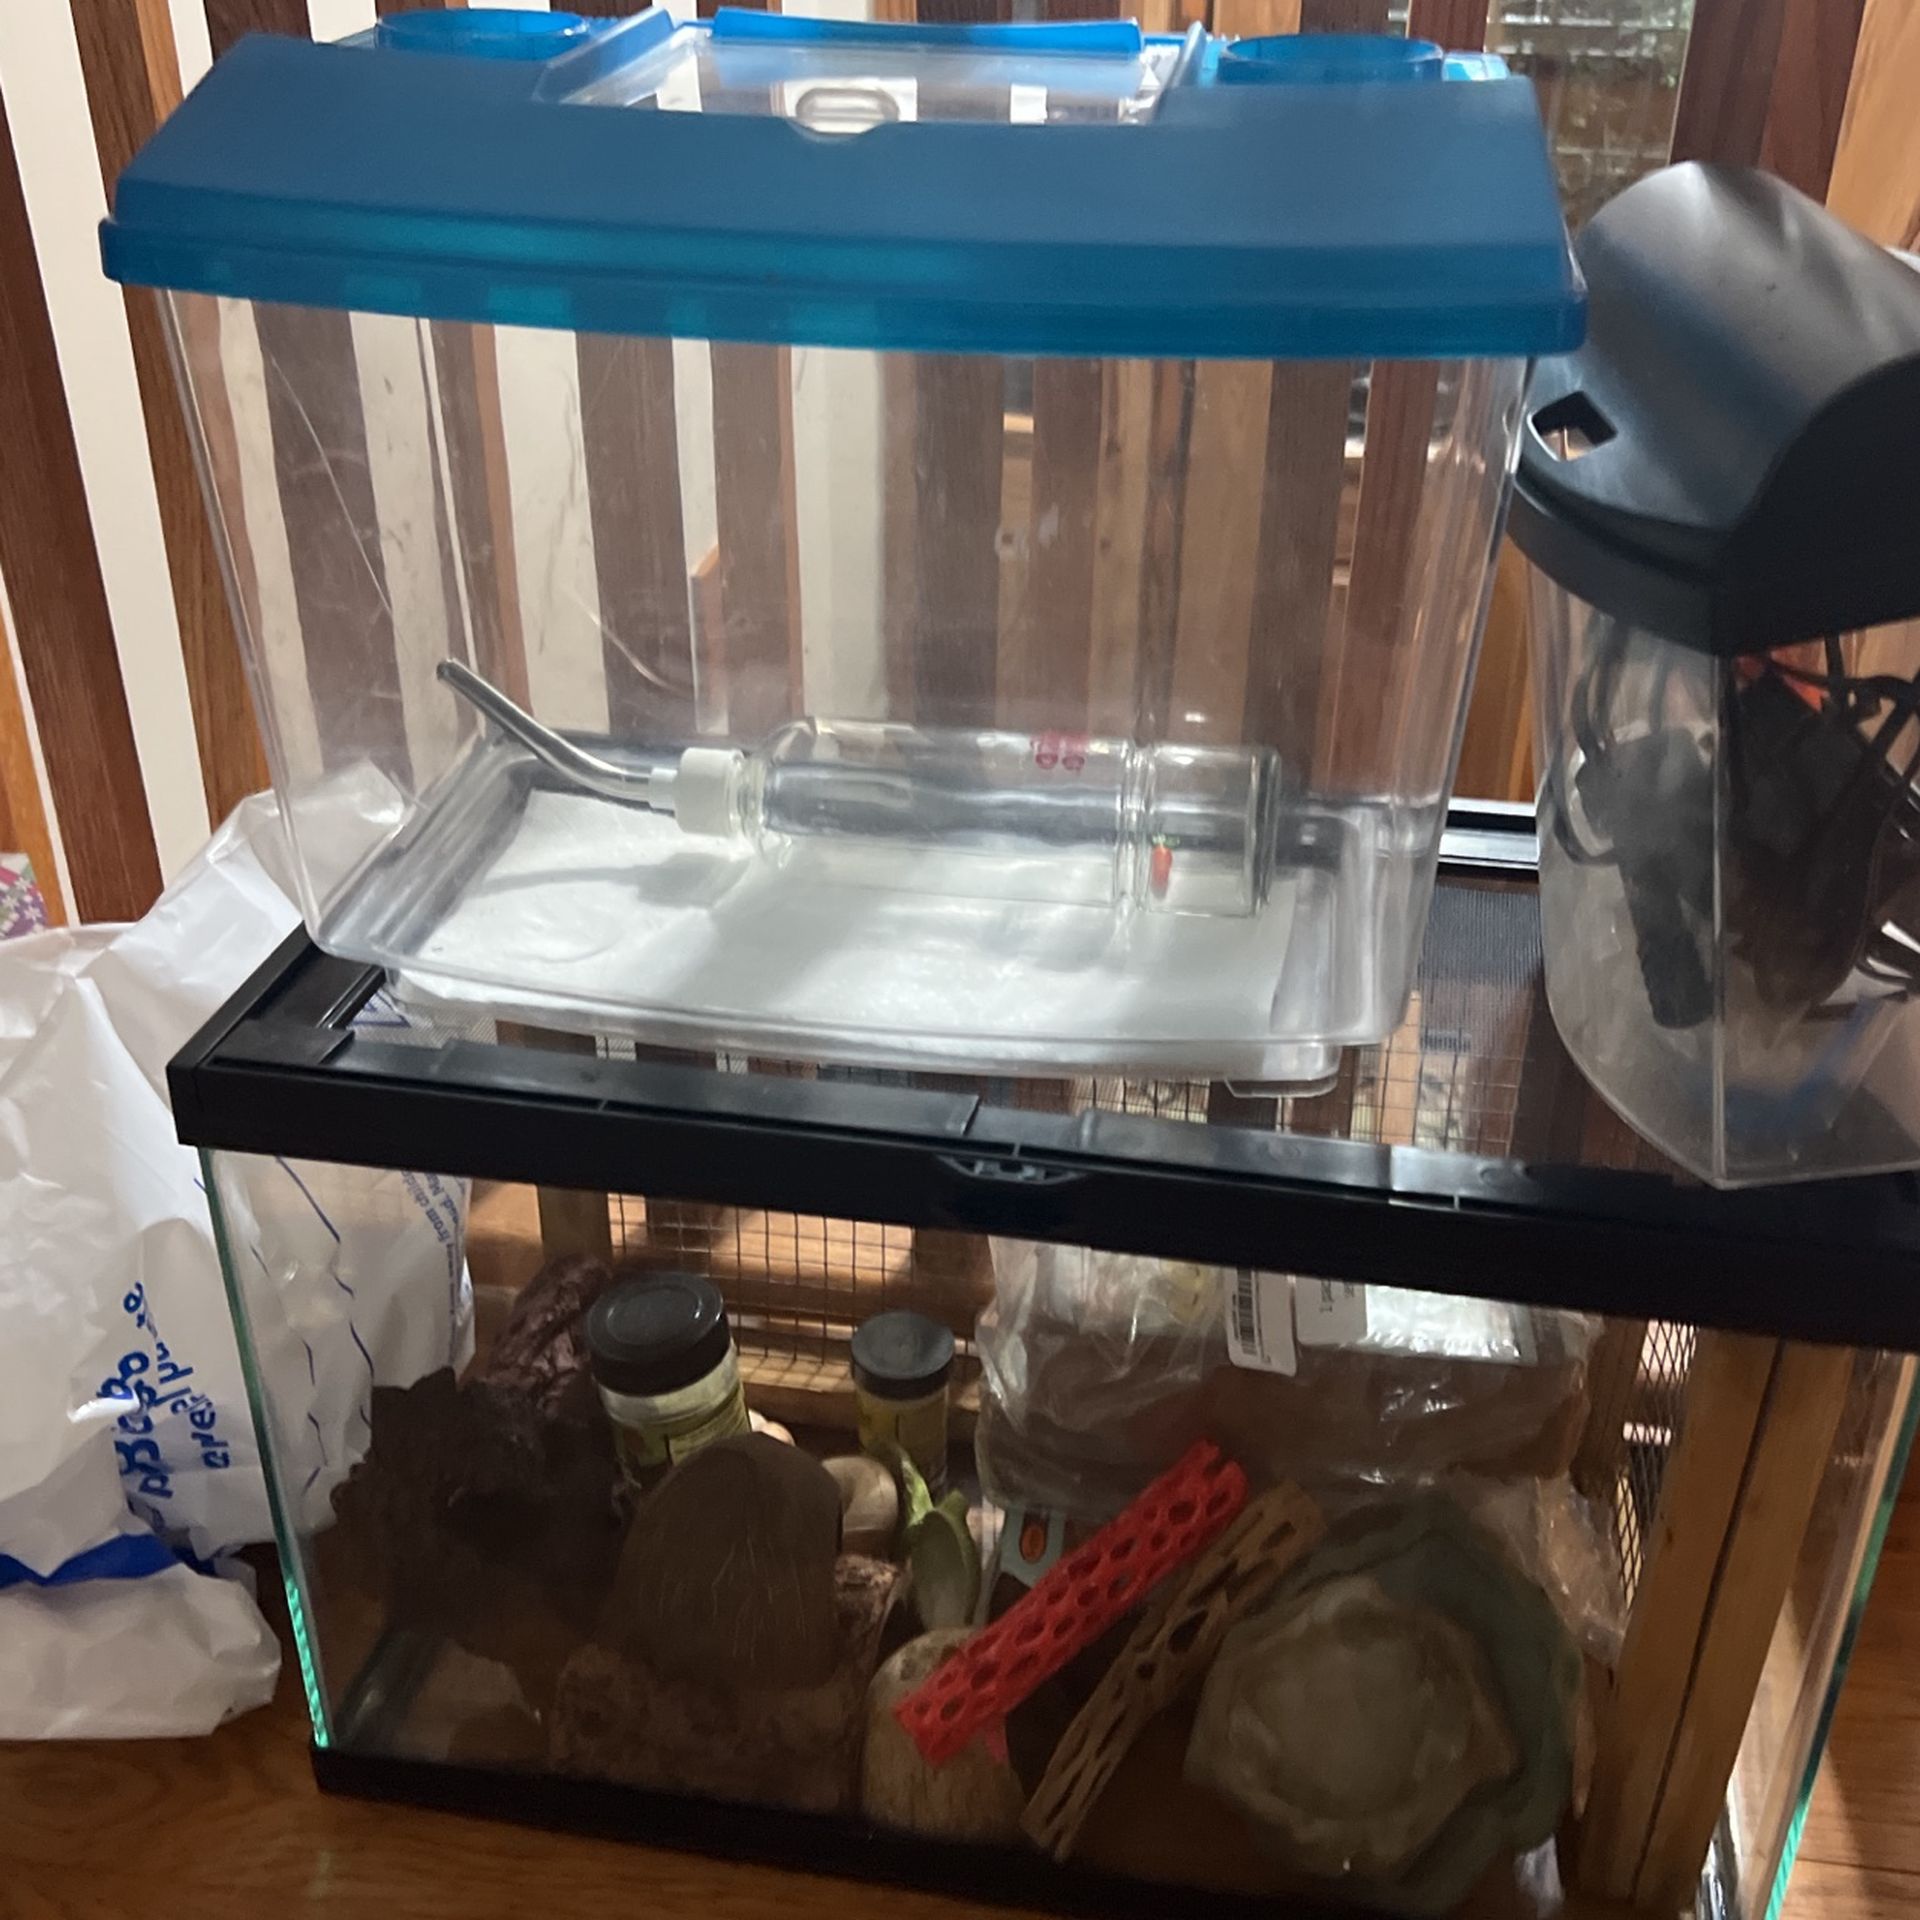 10 Gallon Fish Tank Or Complete Hermit Crab Setup